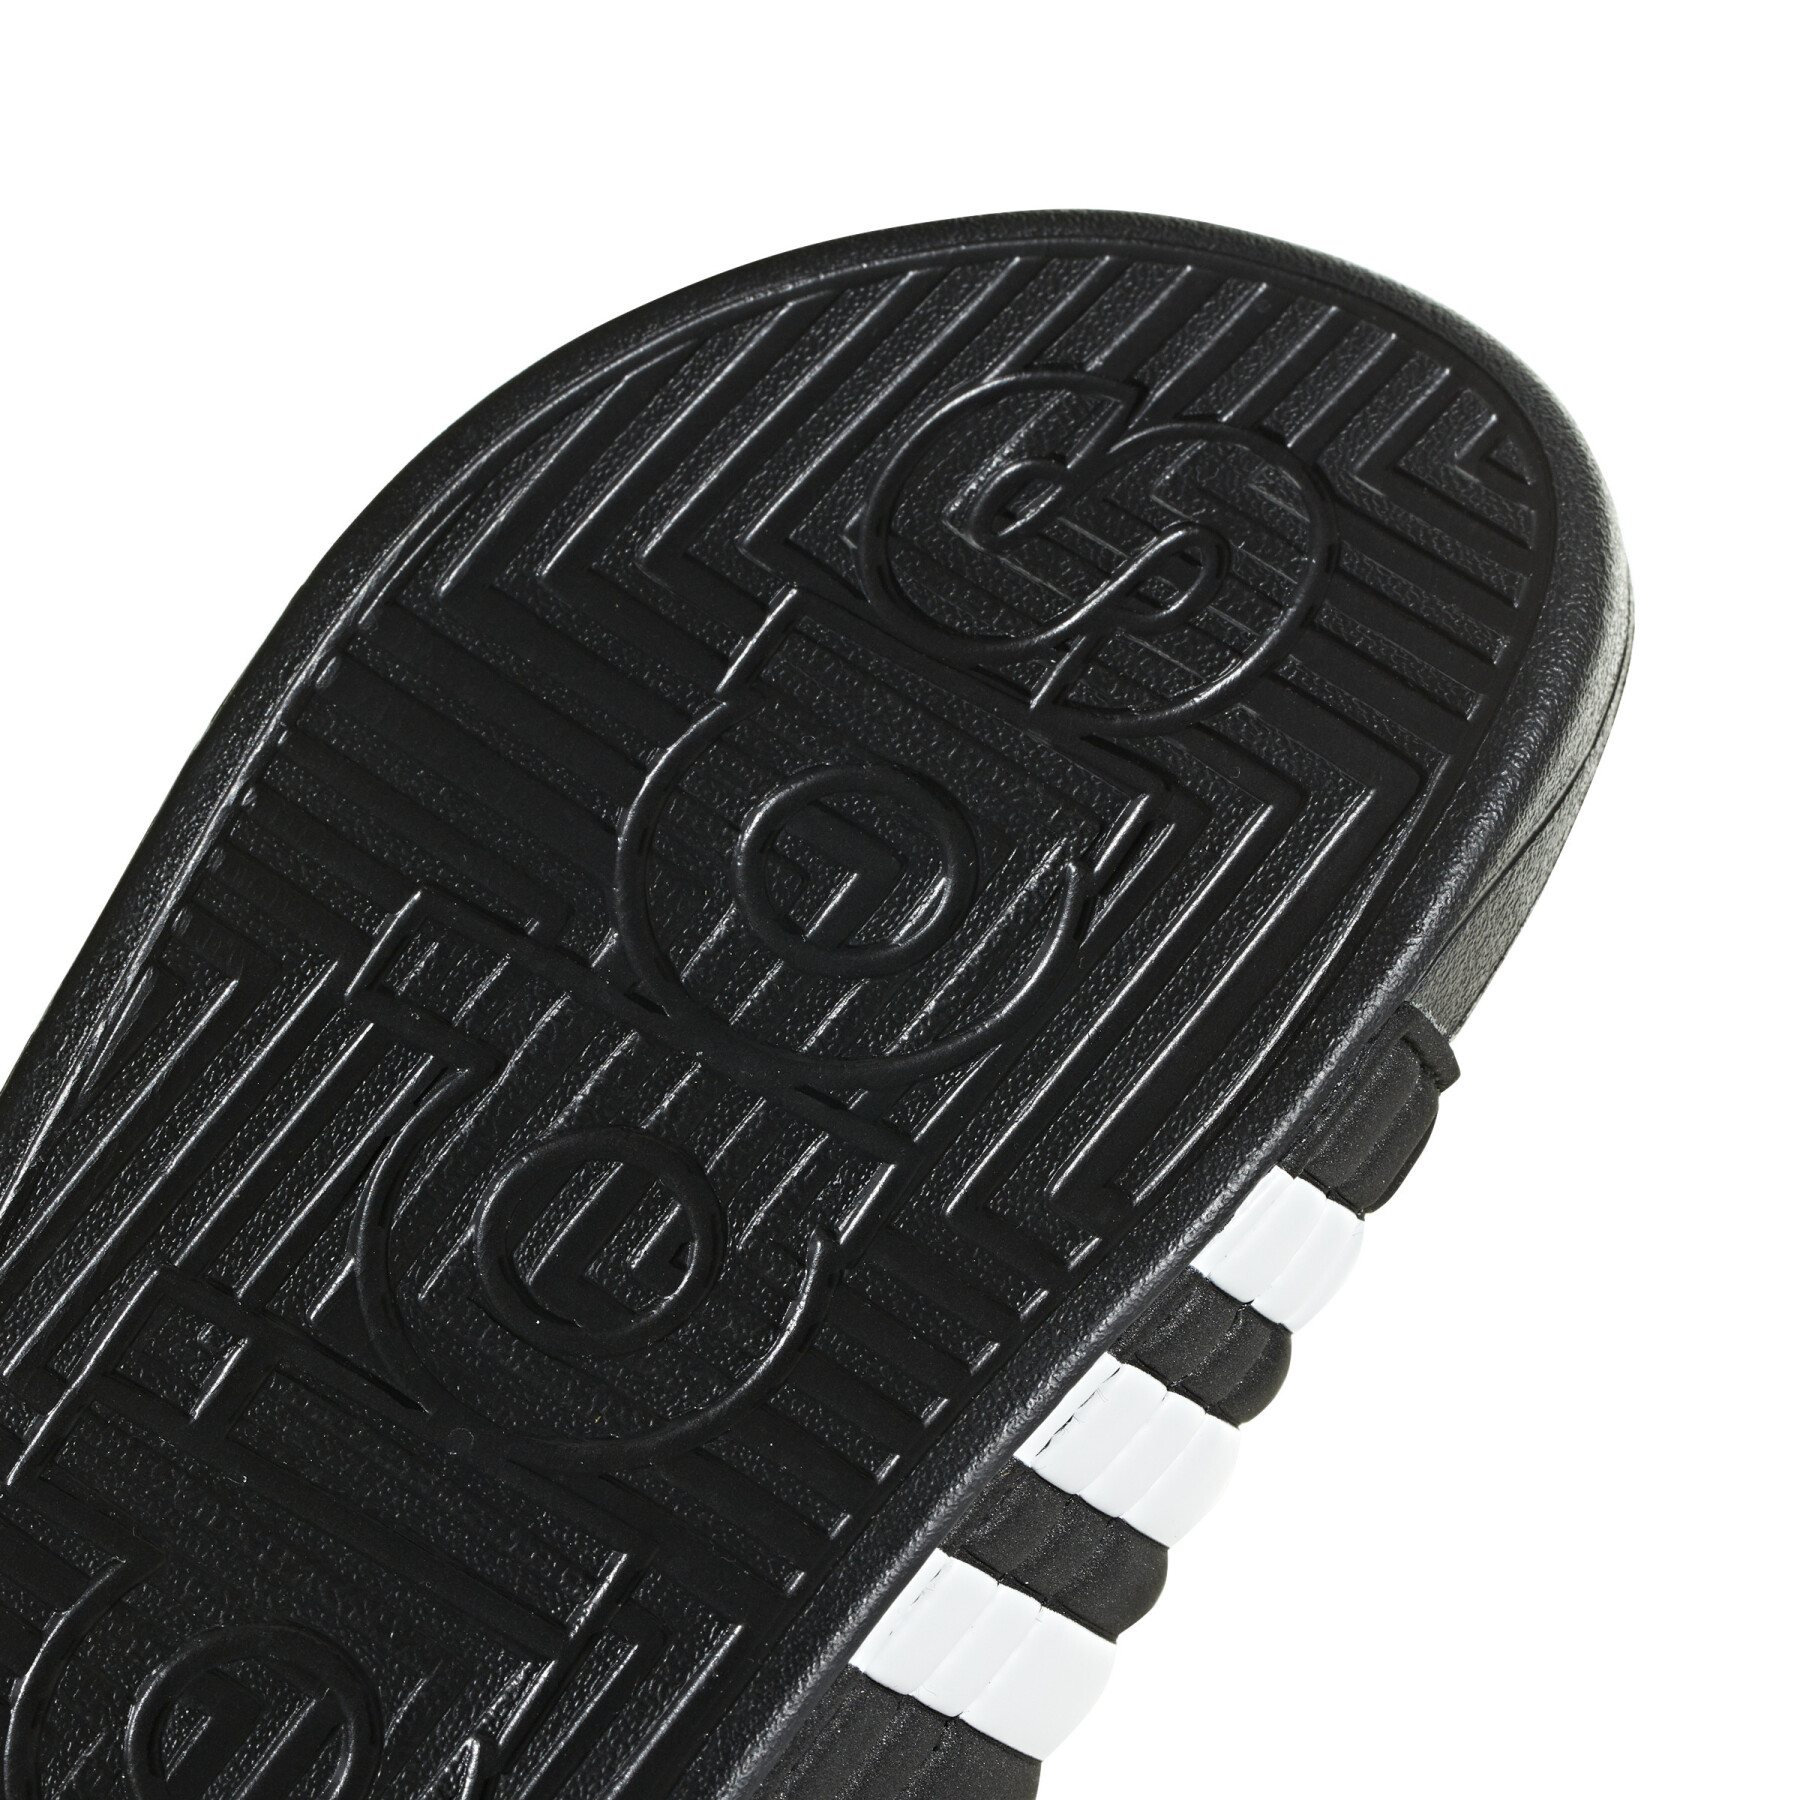 Slippers adidas Adissage